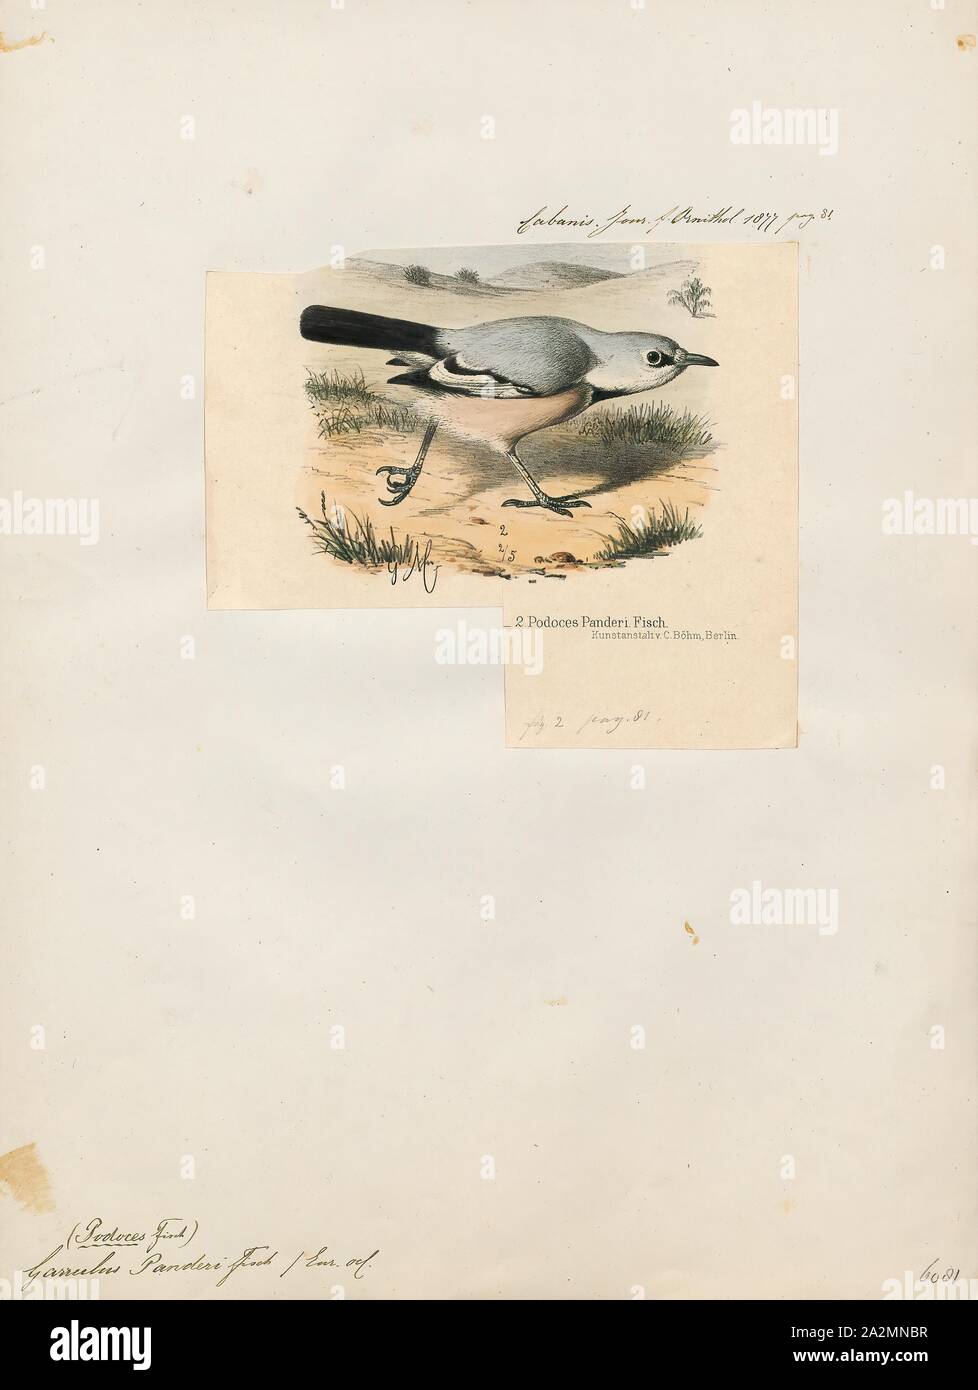 Garrulus panderi, Print, Garrulus is a genus of Old World jays, passerine birds in the family Corvidae., 1877 Stock Photo